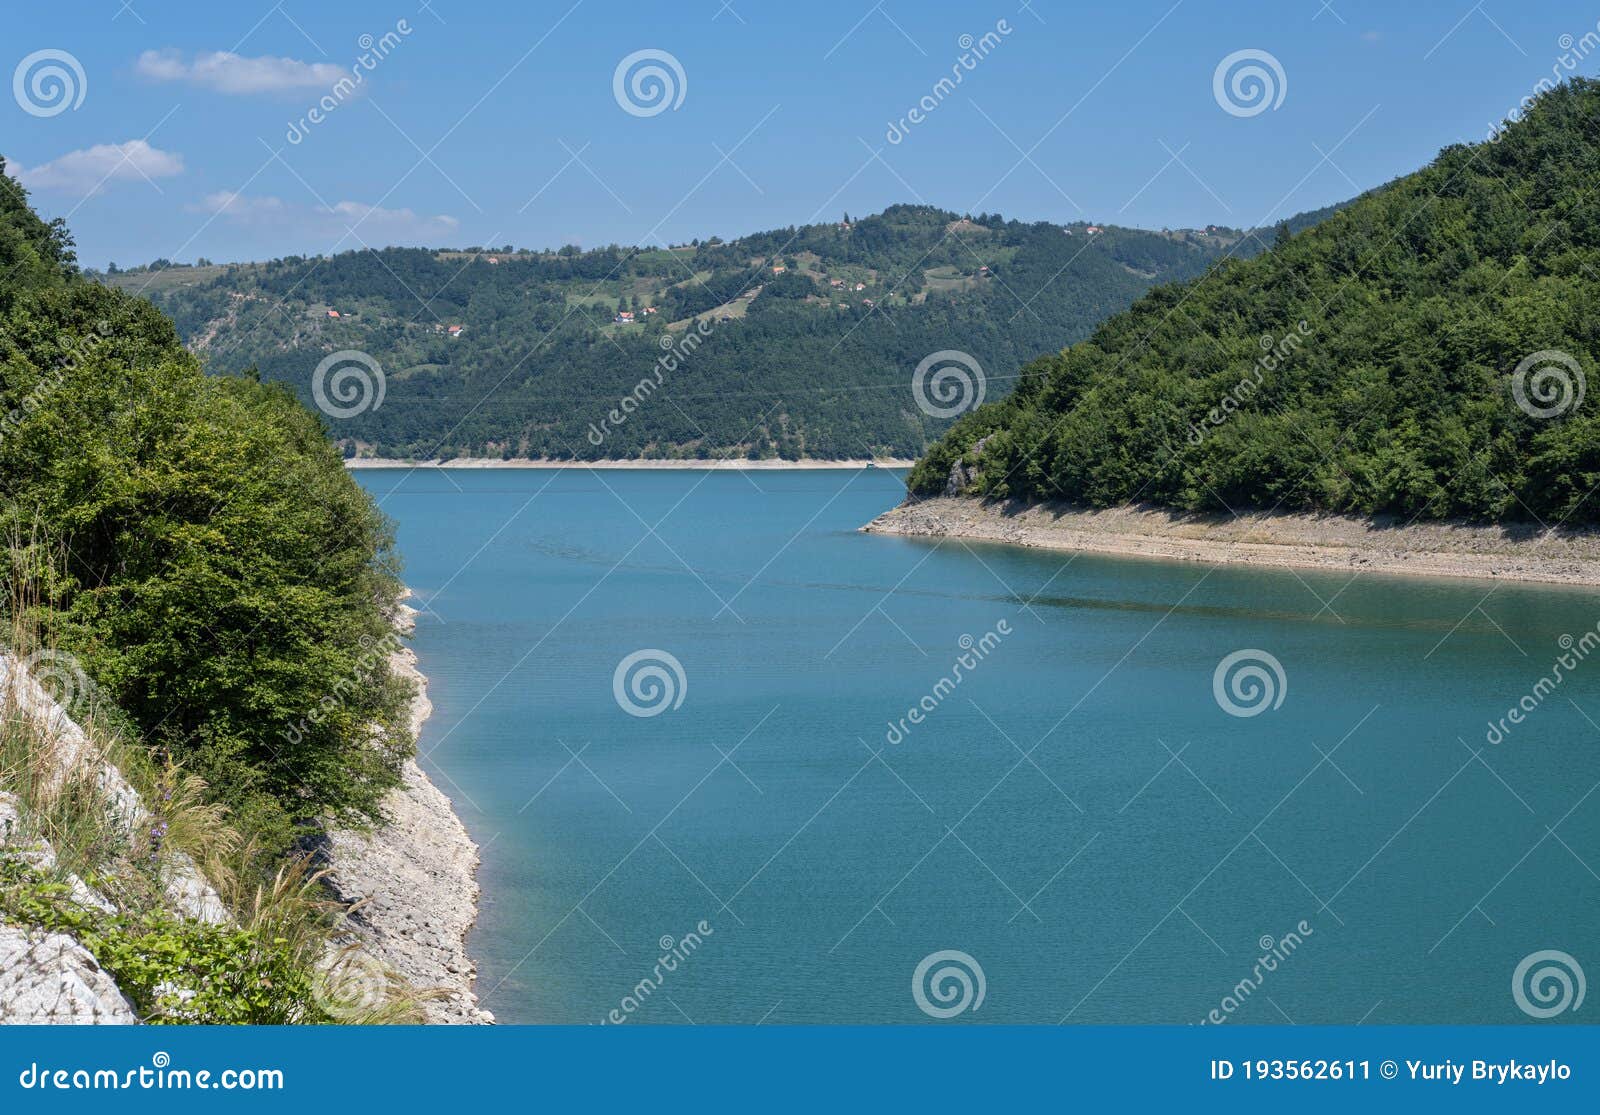 zlatar lake zlatarsko jezero, serbia